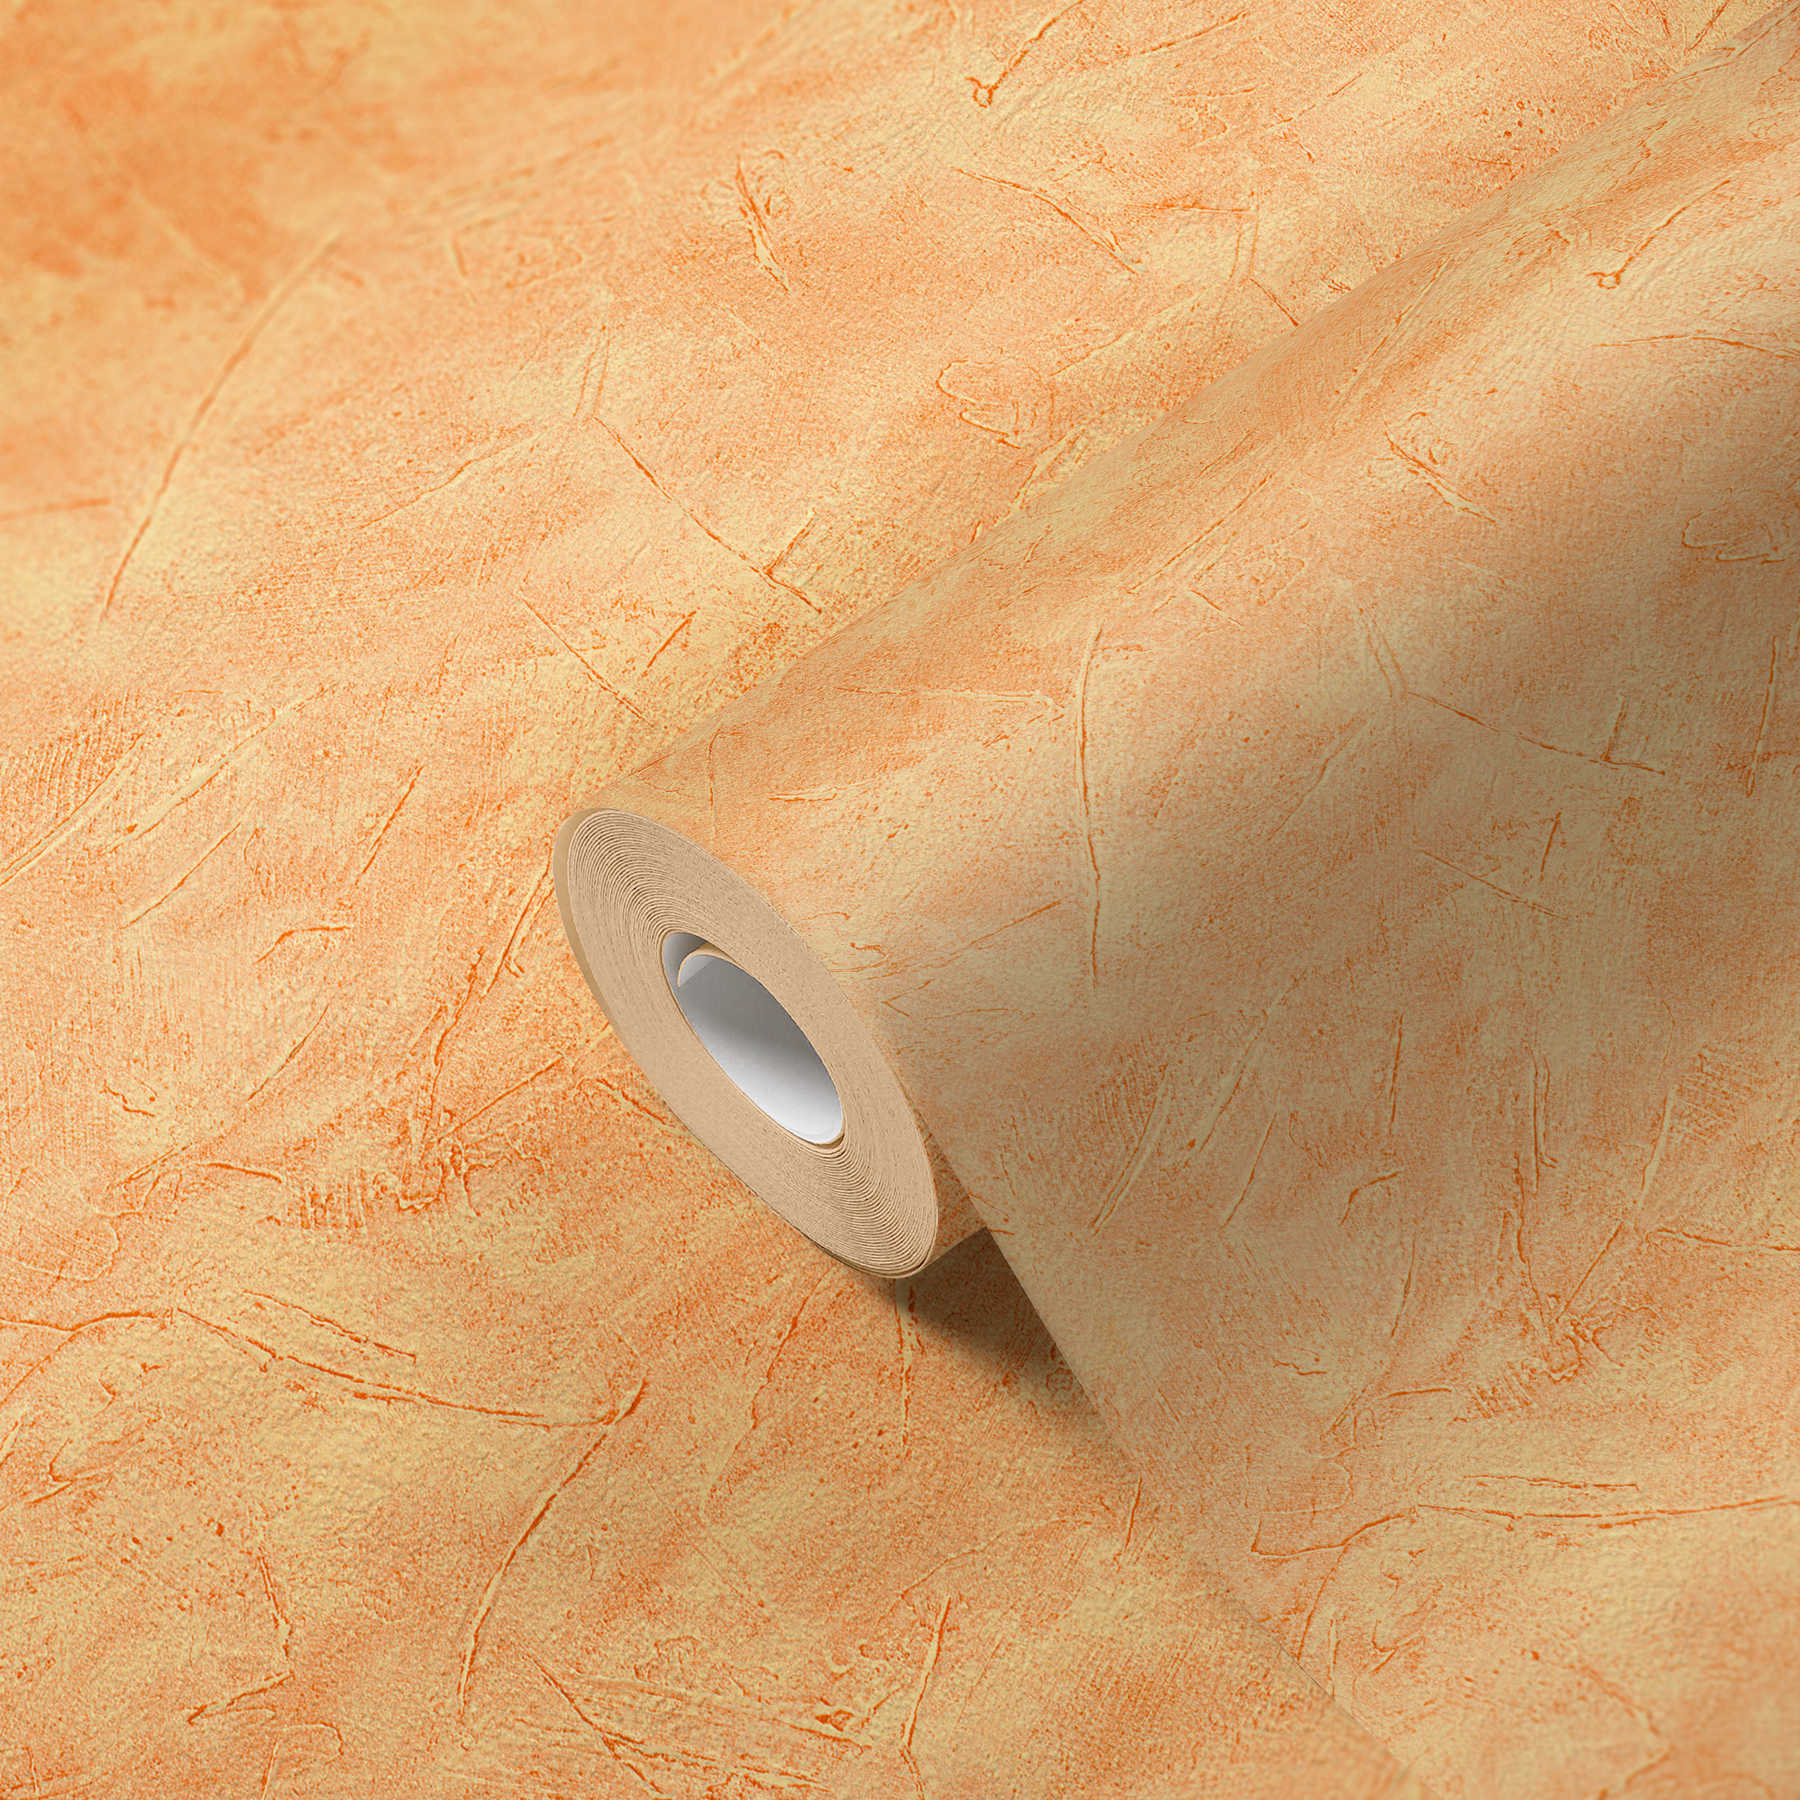             Plaster optics wallpaper with wipe look & hatch pattern - orange
        